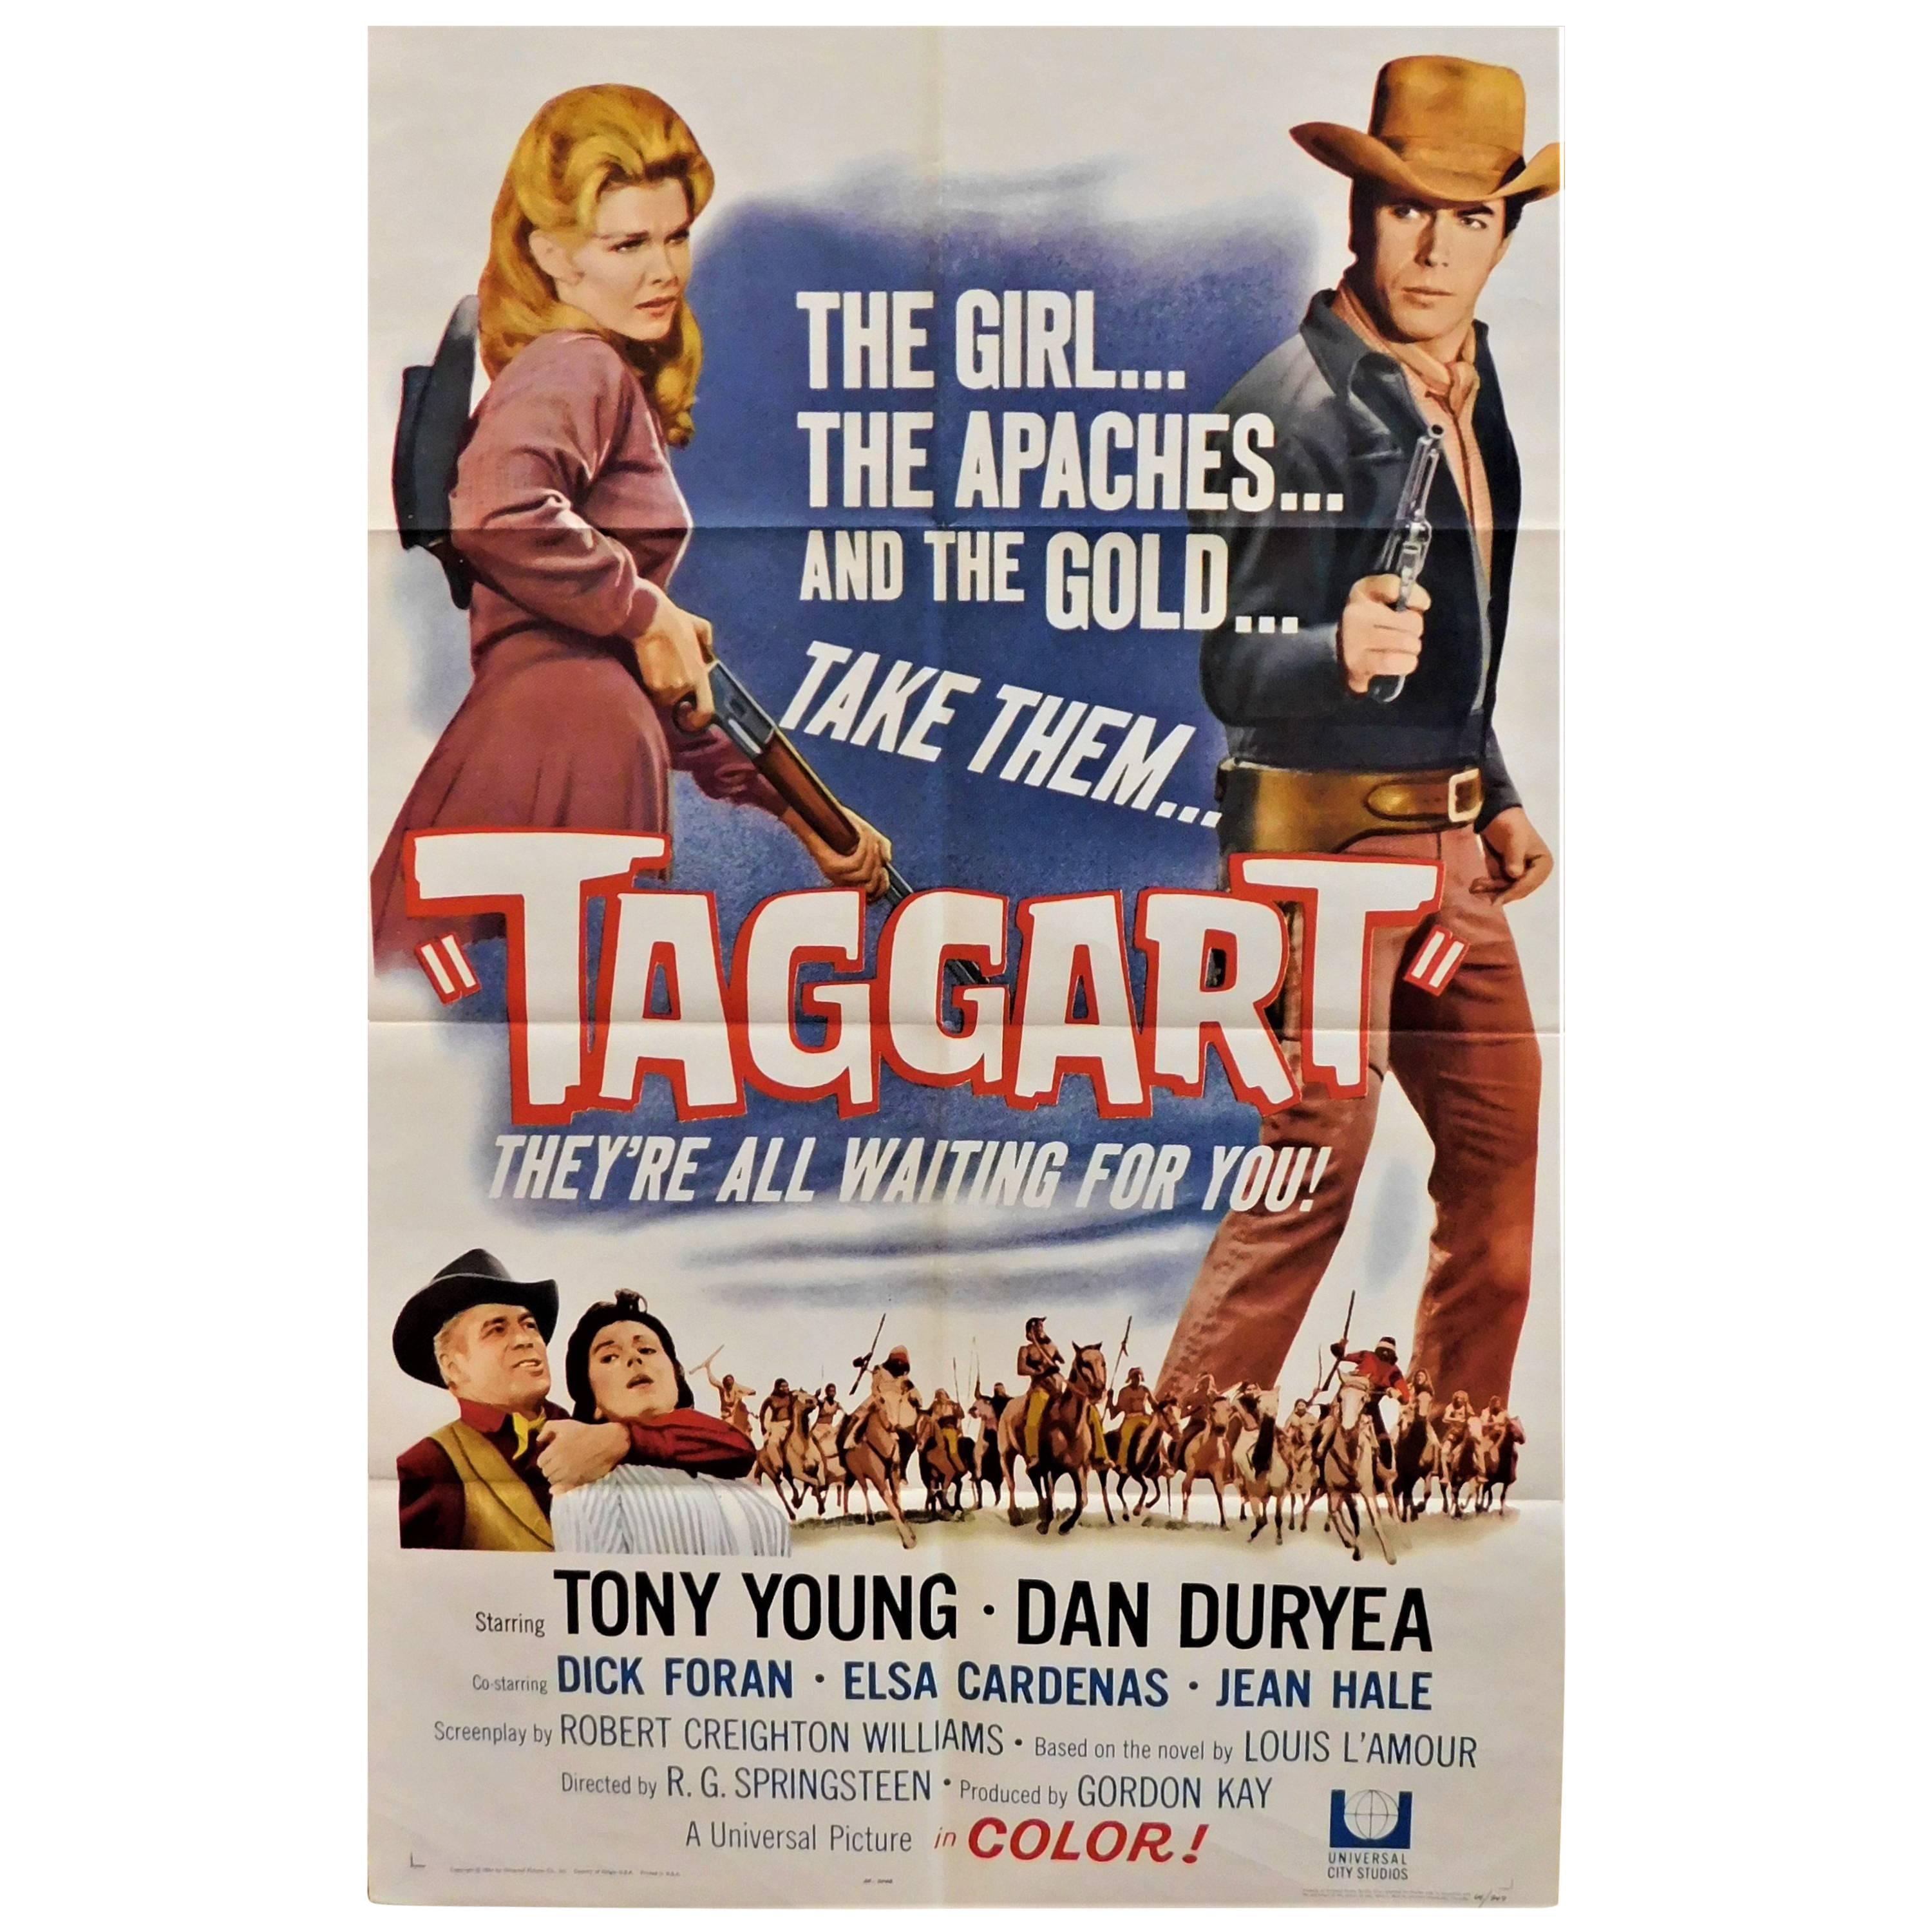  "Taggart" 1964 Original Movie Poster